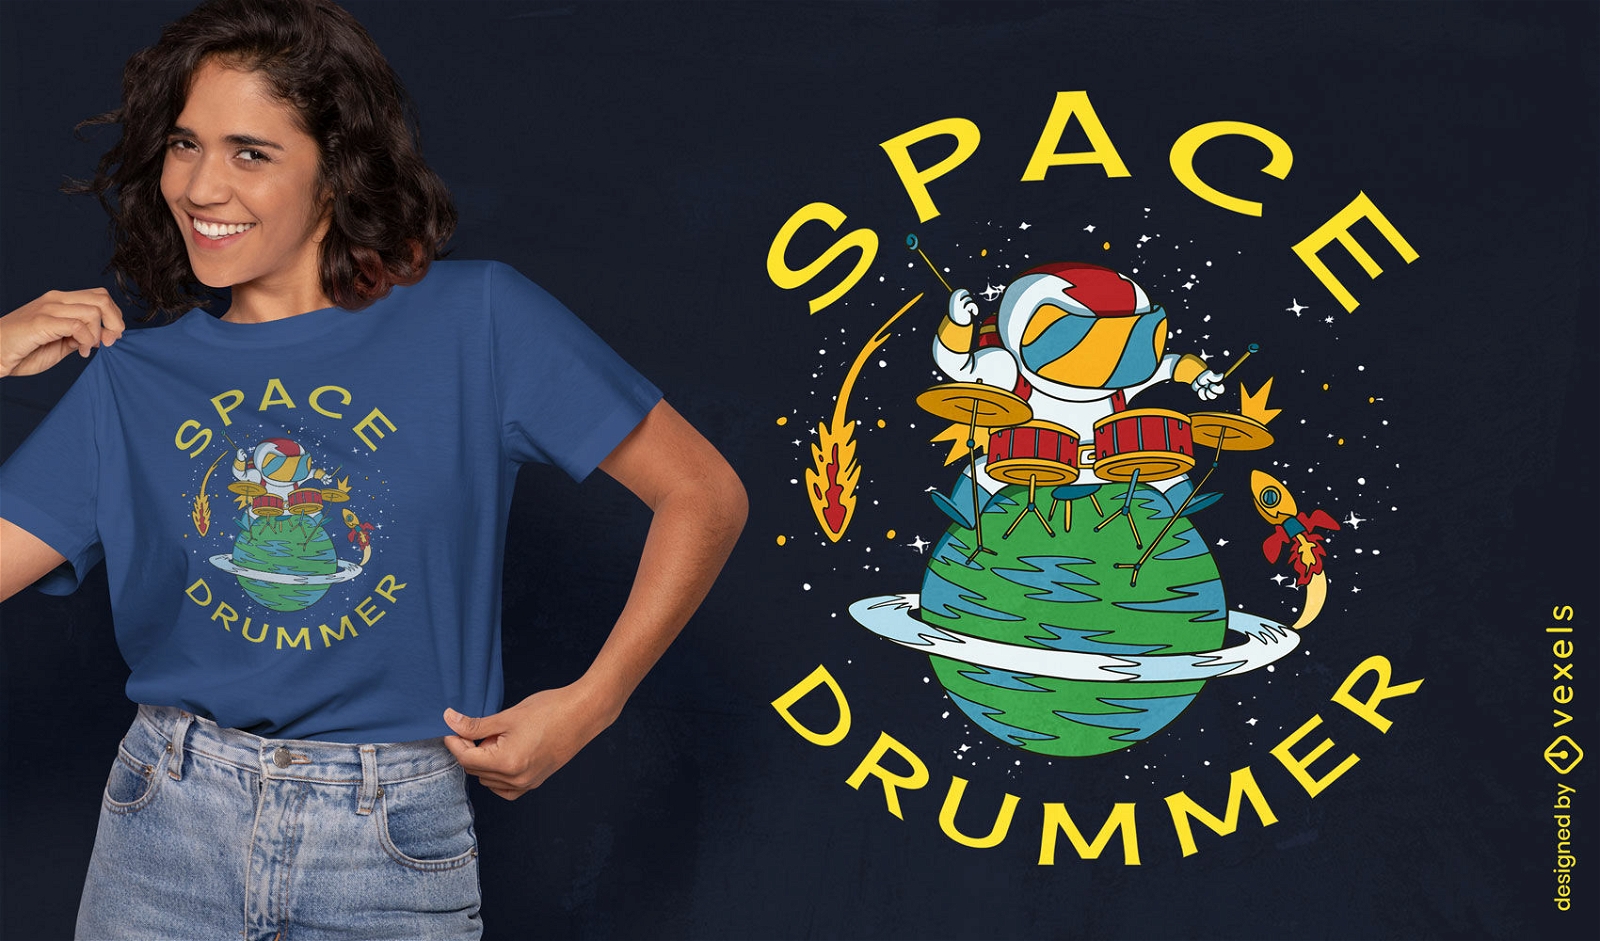 Space astronaut drummer t-shirt design